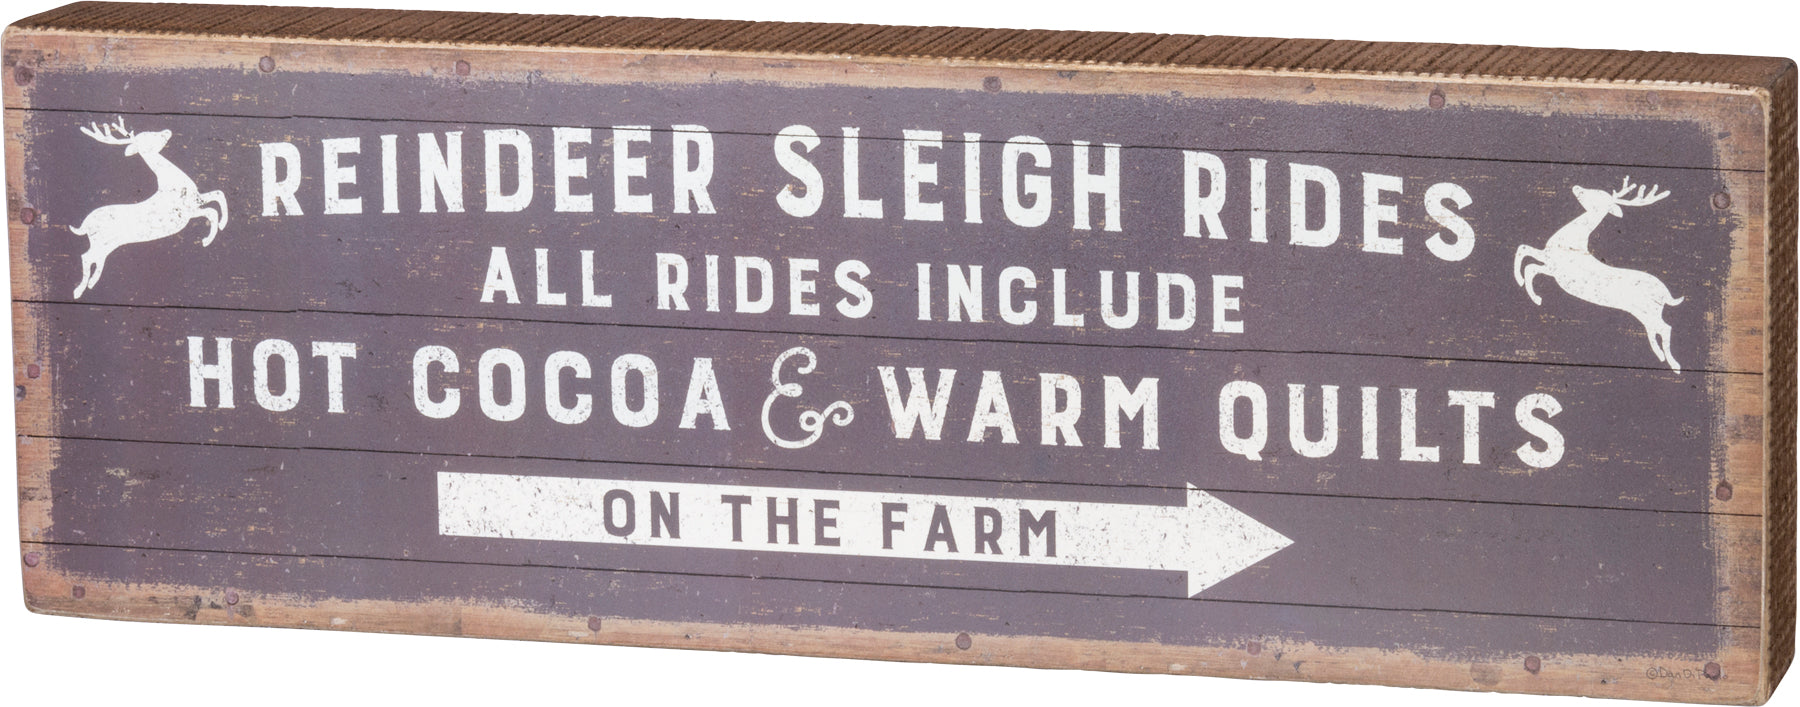 Large Box Sign - Reindeer Sleigh Rides